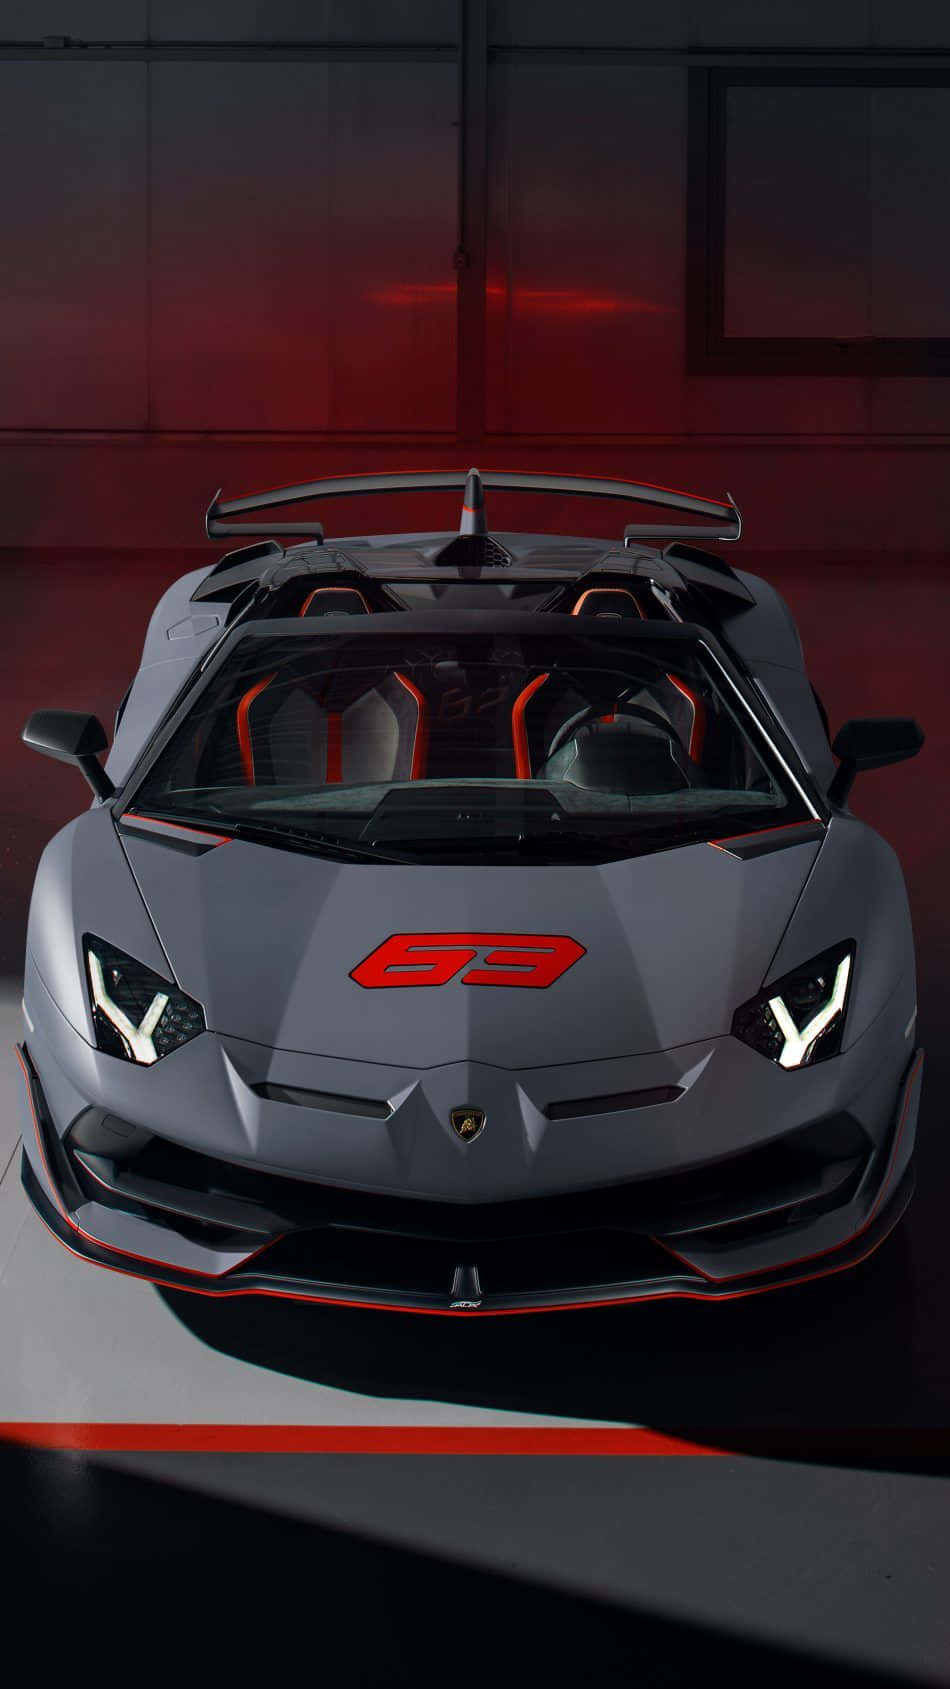 "Luxury at its finest: The Pixel 3 XL Lamborghini Edition."